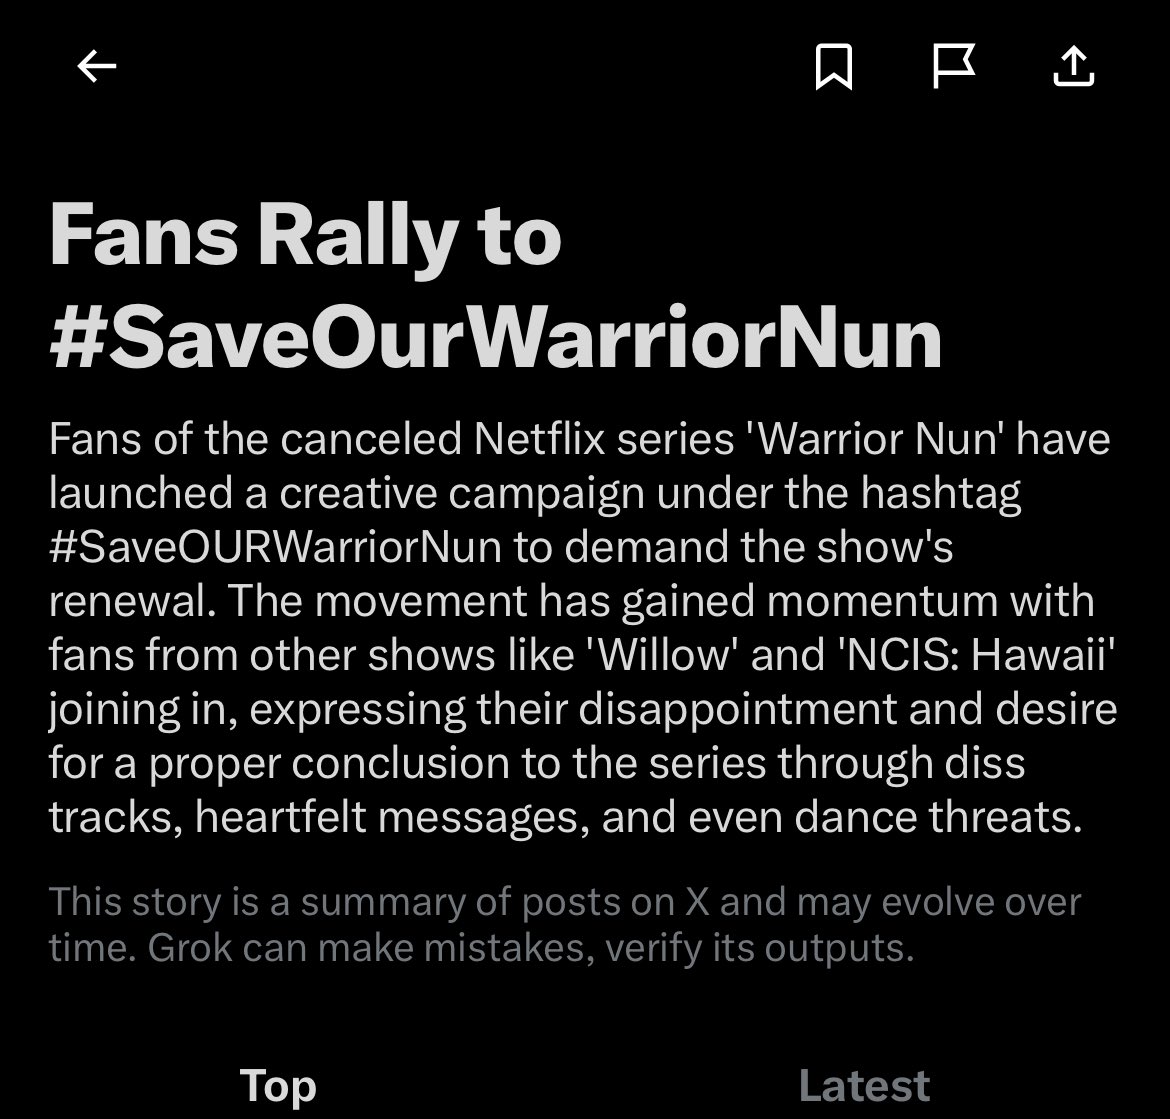 Ohhhh Twitter what is all this now
#SaveOURWarriorNun #WarriorNun